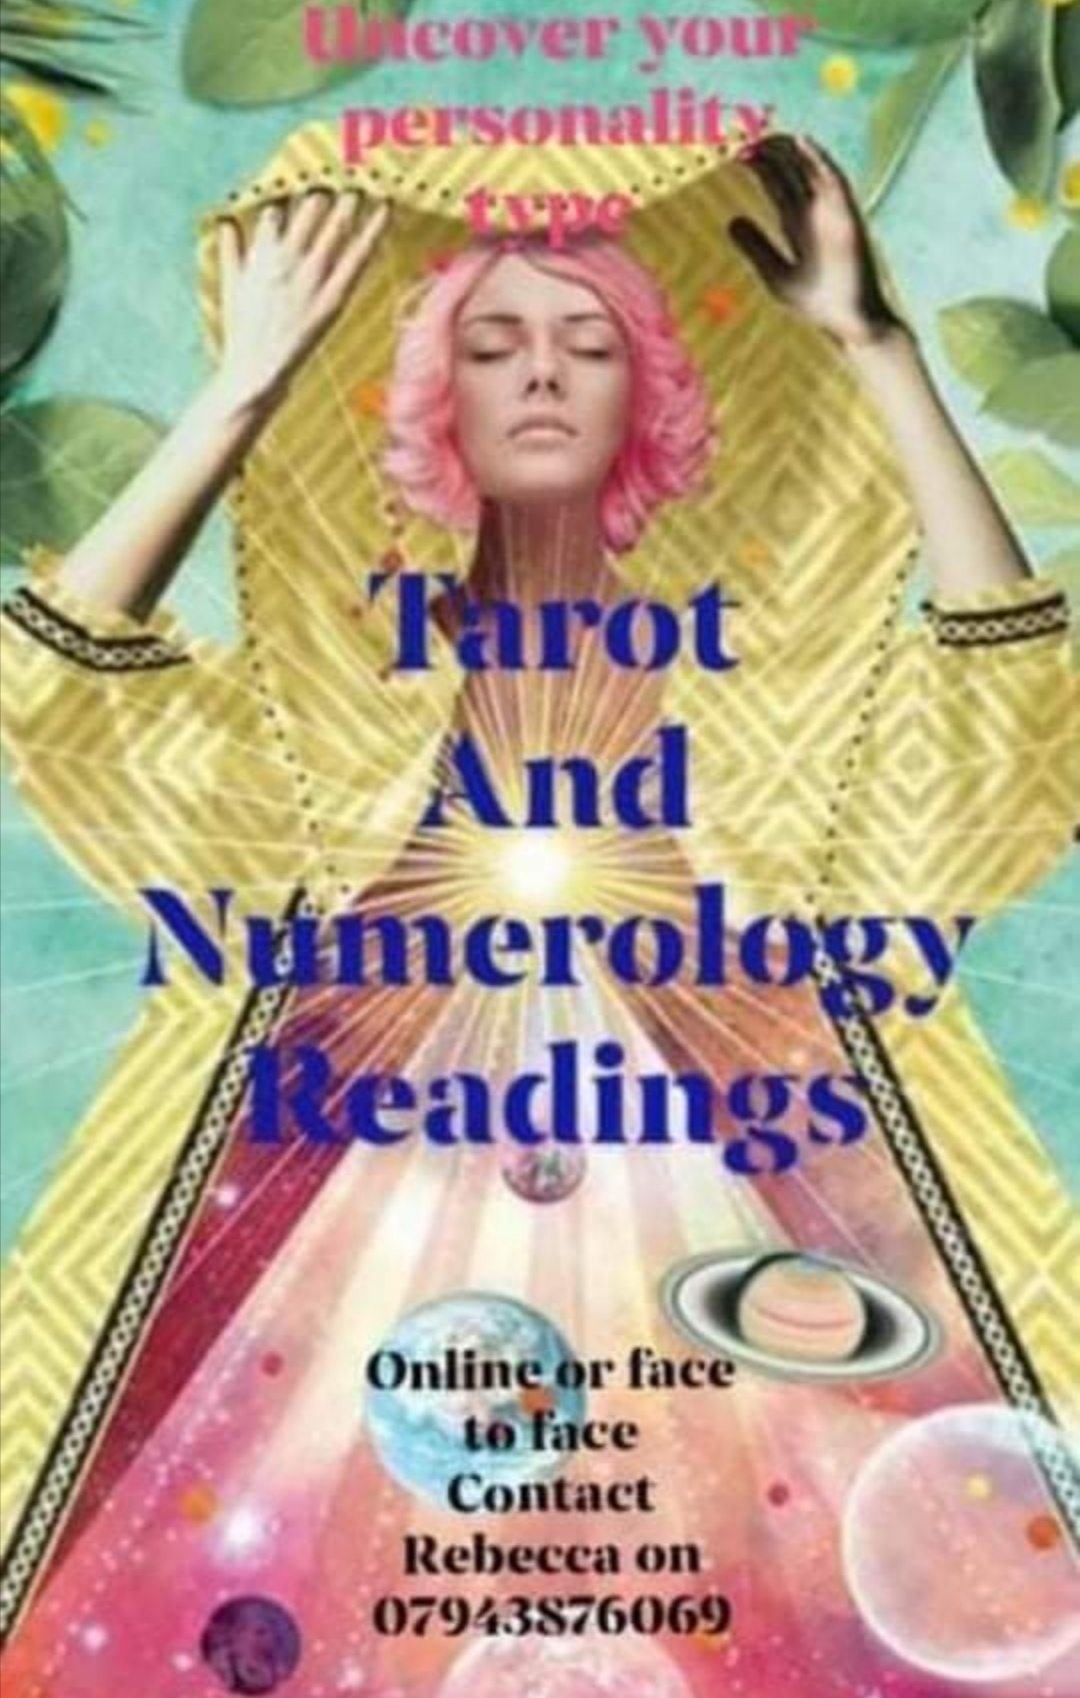 Tarot and Numerology Readings